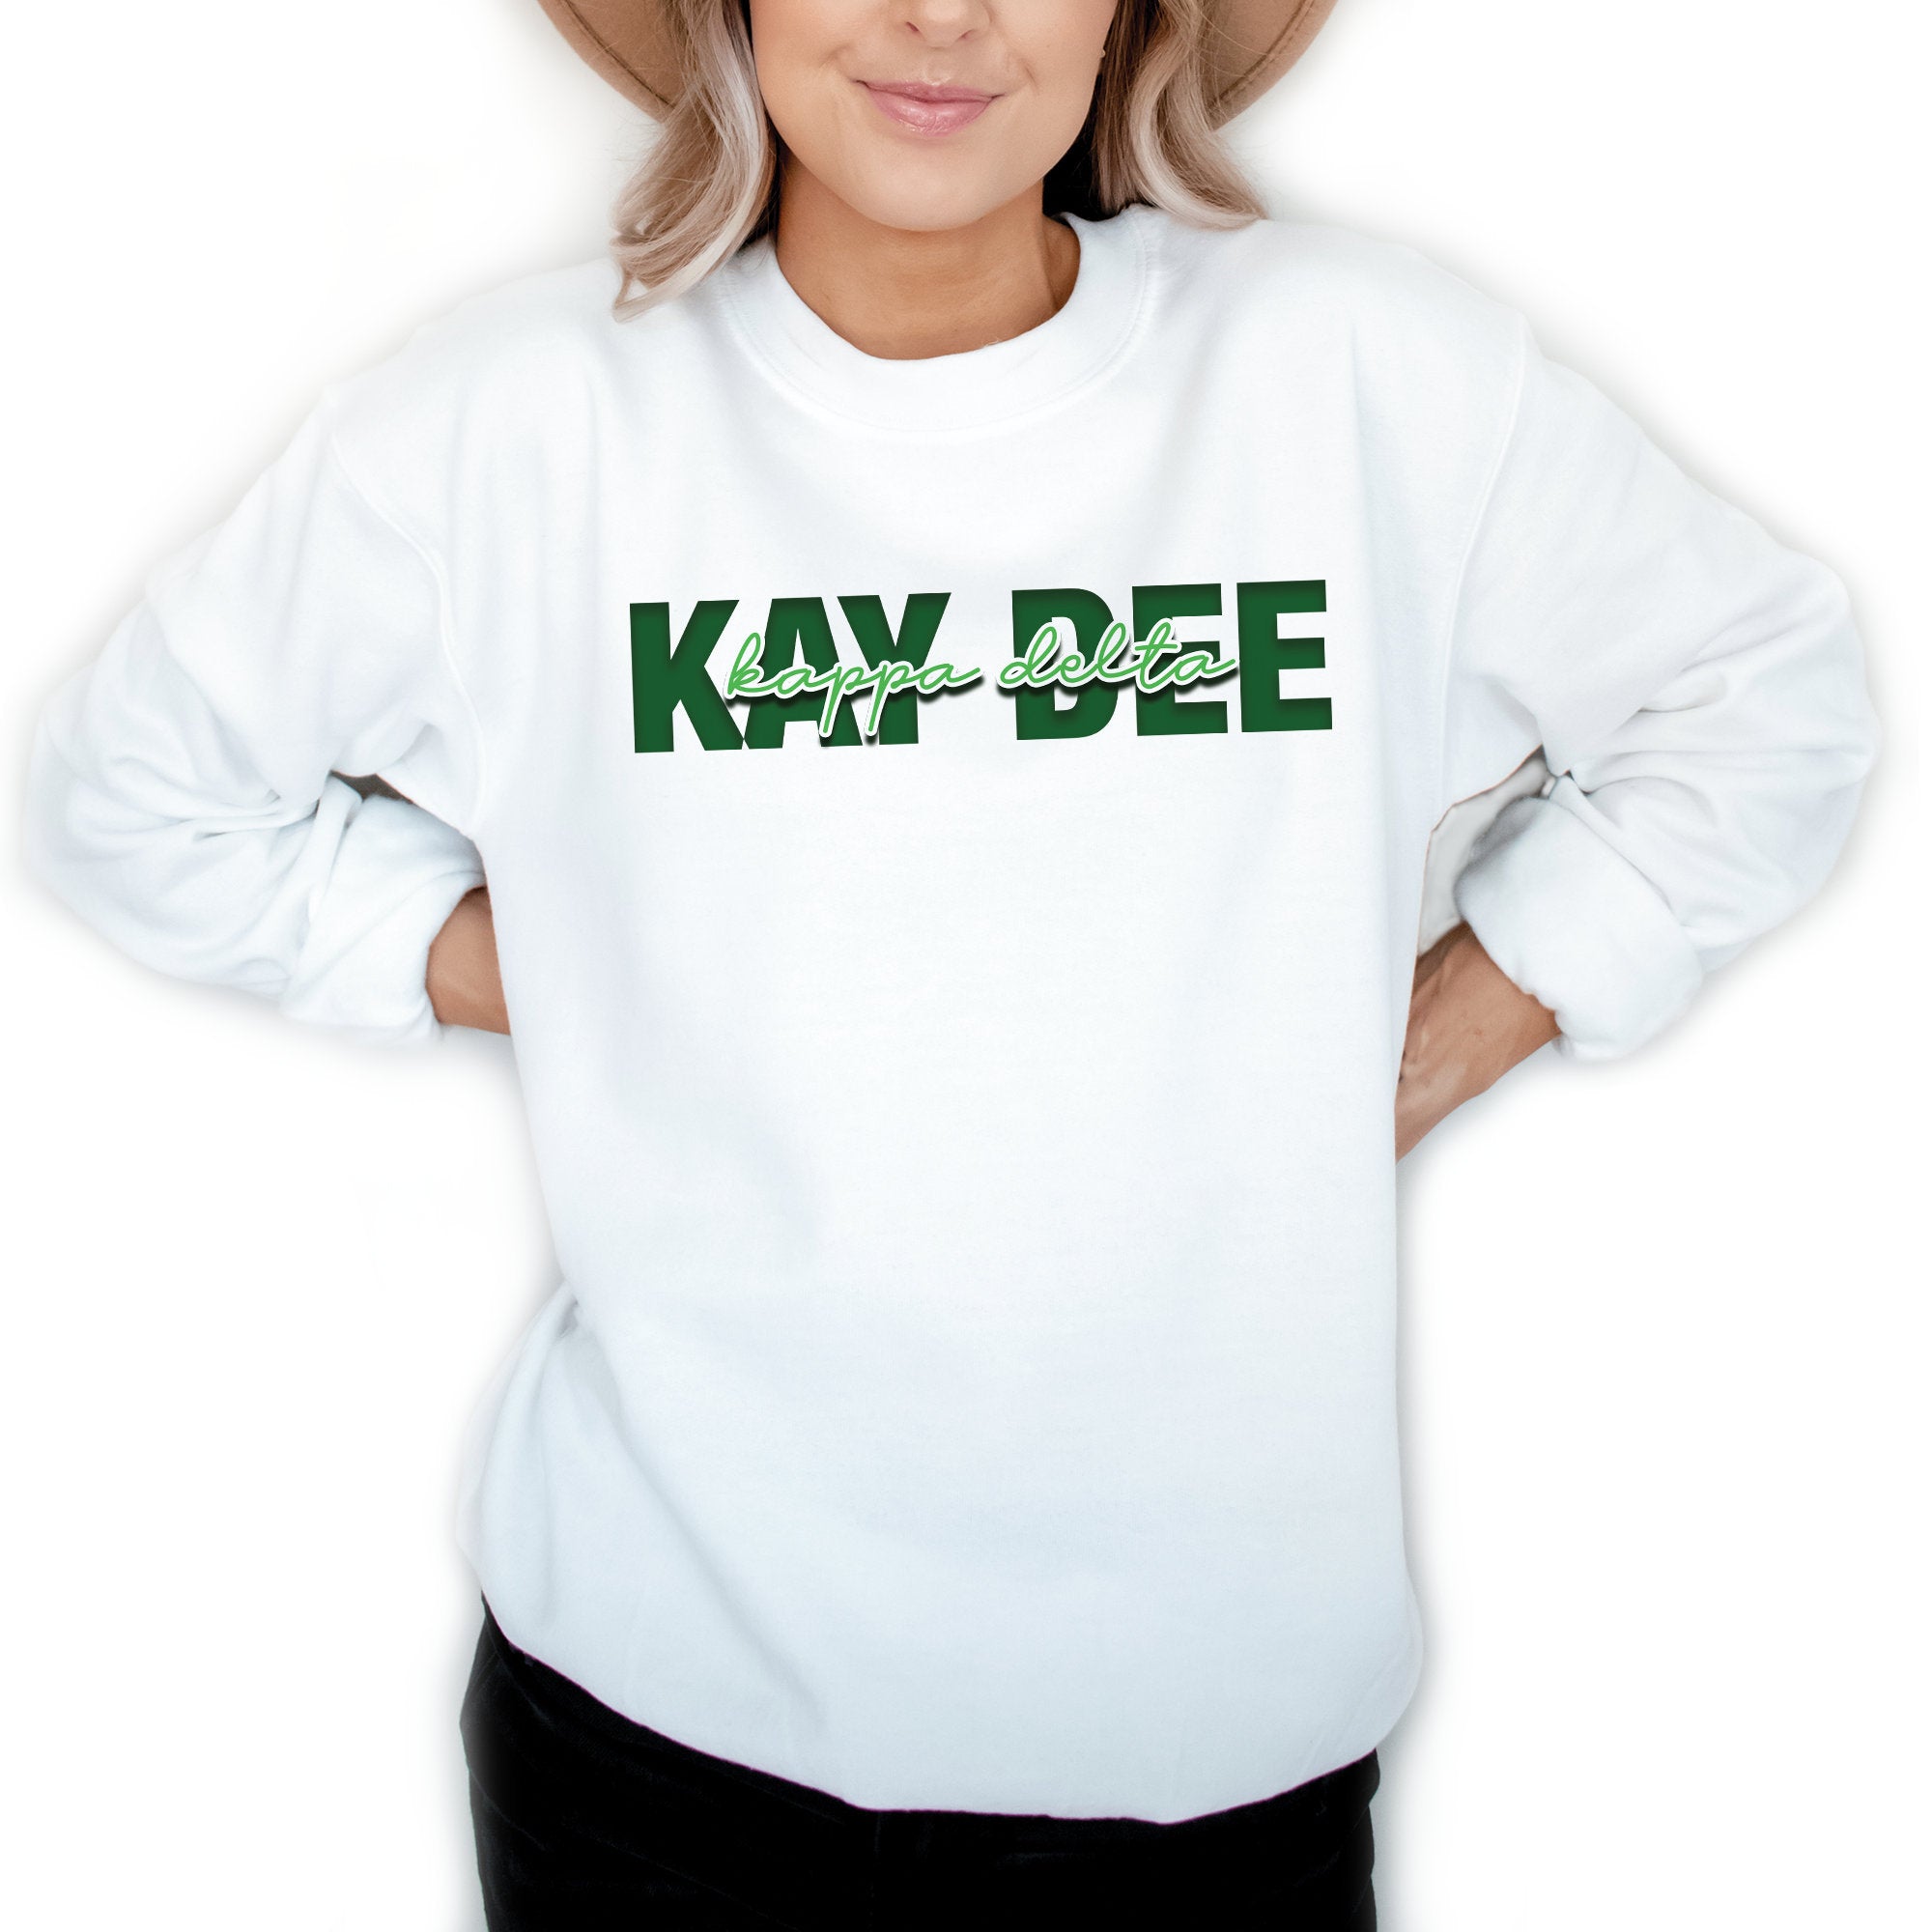 Kappa Delta Signature Sweatshirt - Go Greek Chic